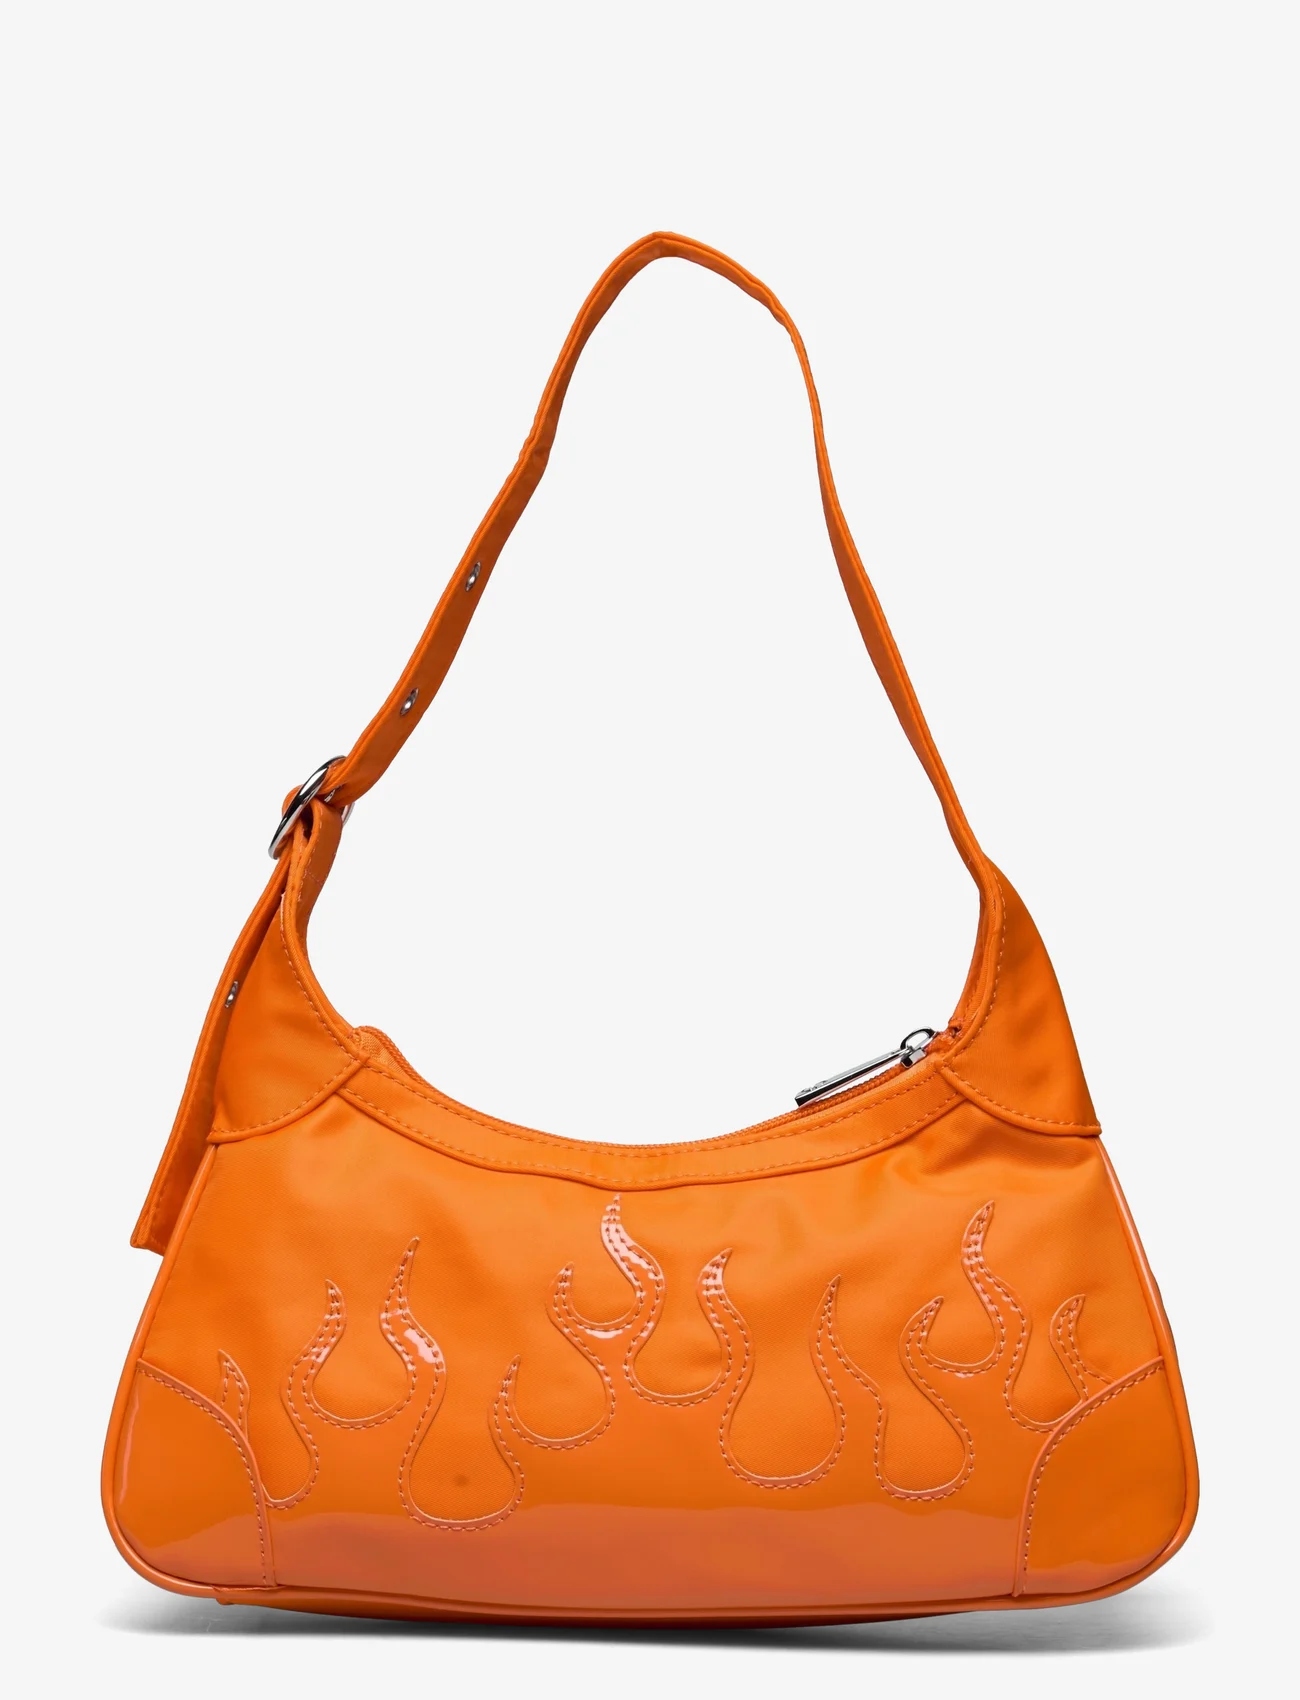 Silfen - Shoulder Bag Thora - Flame - top handle - orange - 1